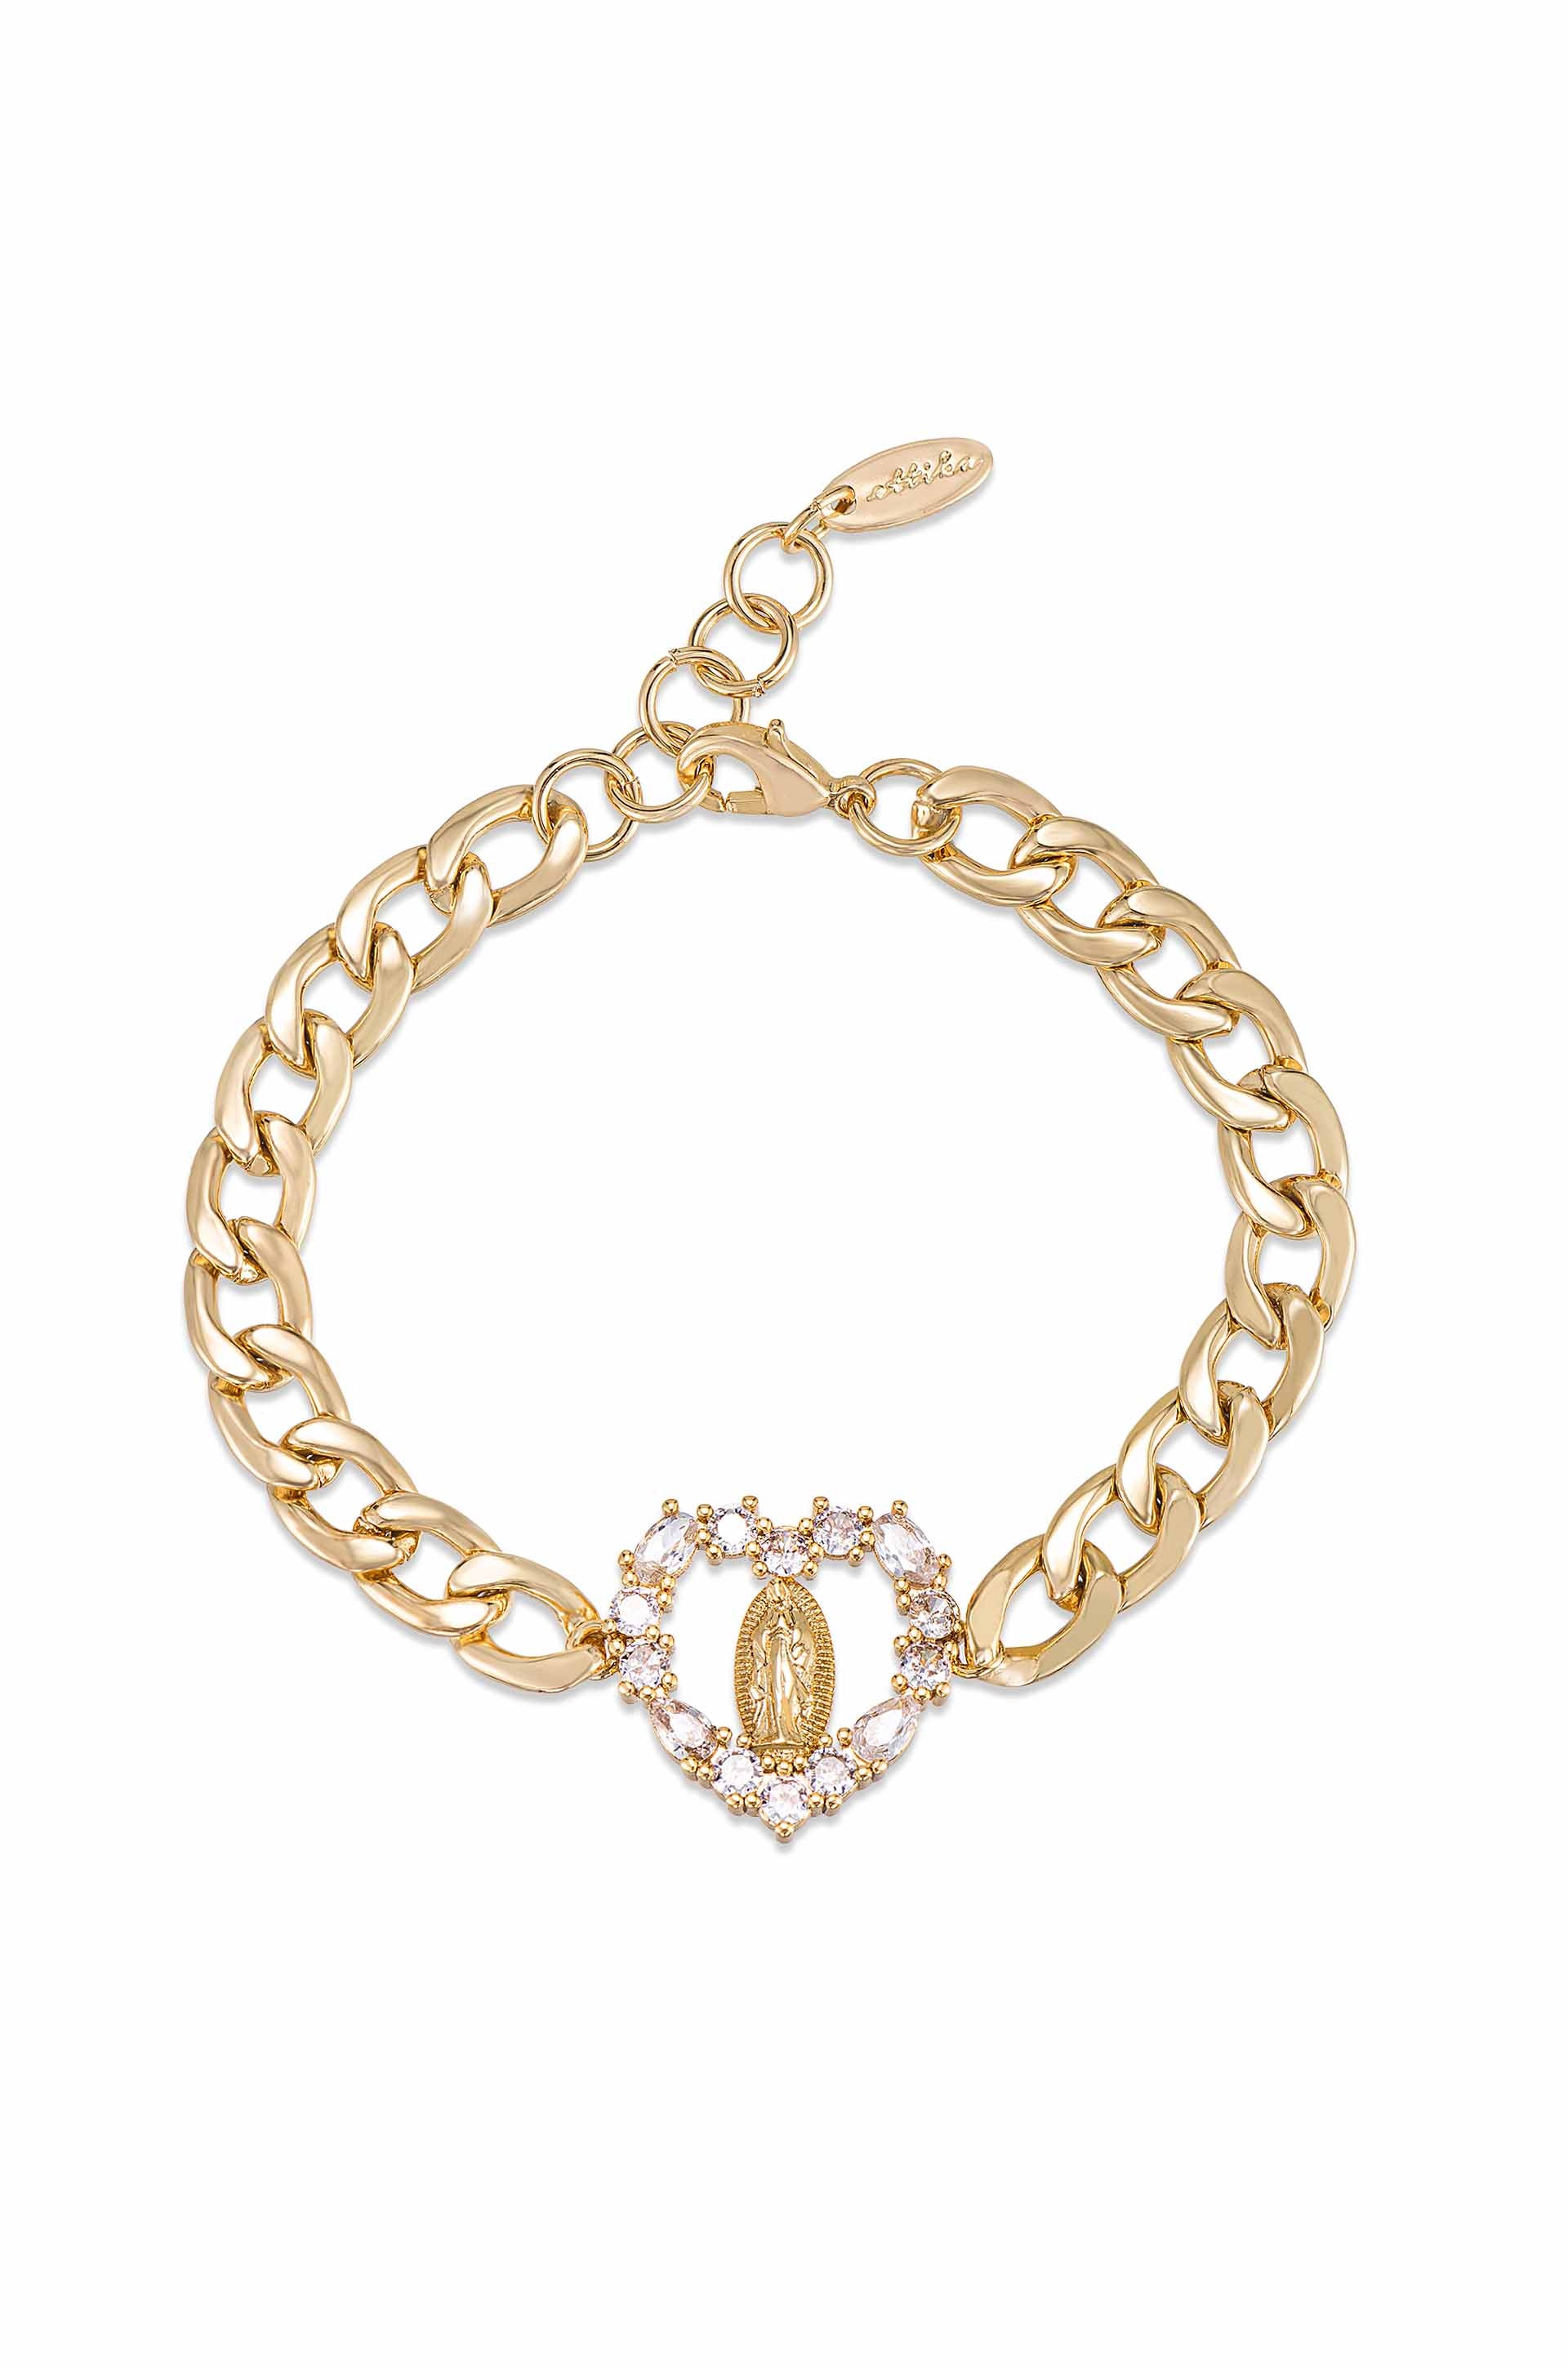 Faith and Love 18k Gold Plated Bracelet on white